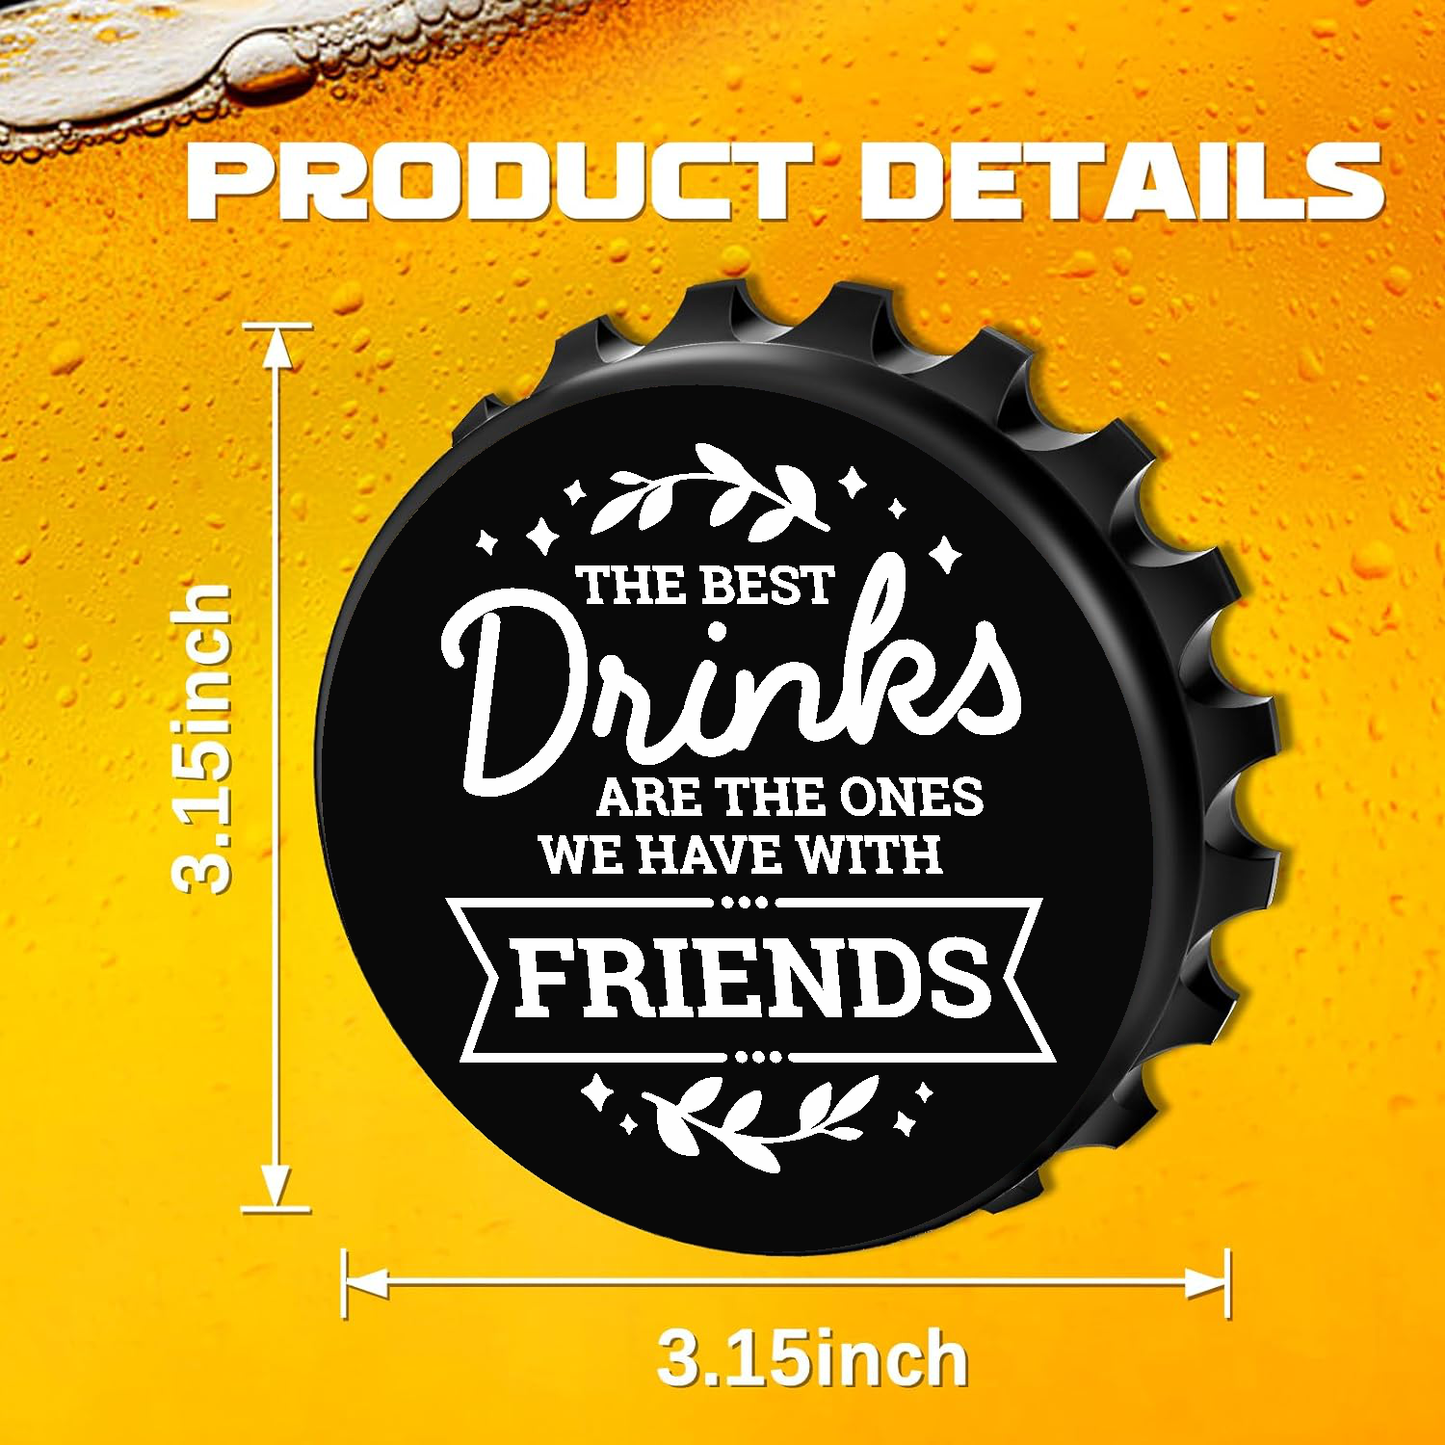 The Best Drinks Are With Friends - Designer Beer Bottle Opener Magnet for Refrigerator, Gifts for Beer Lovers, Black